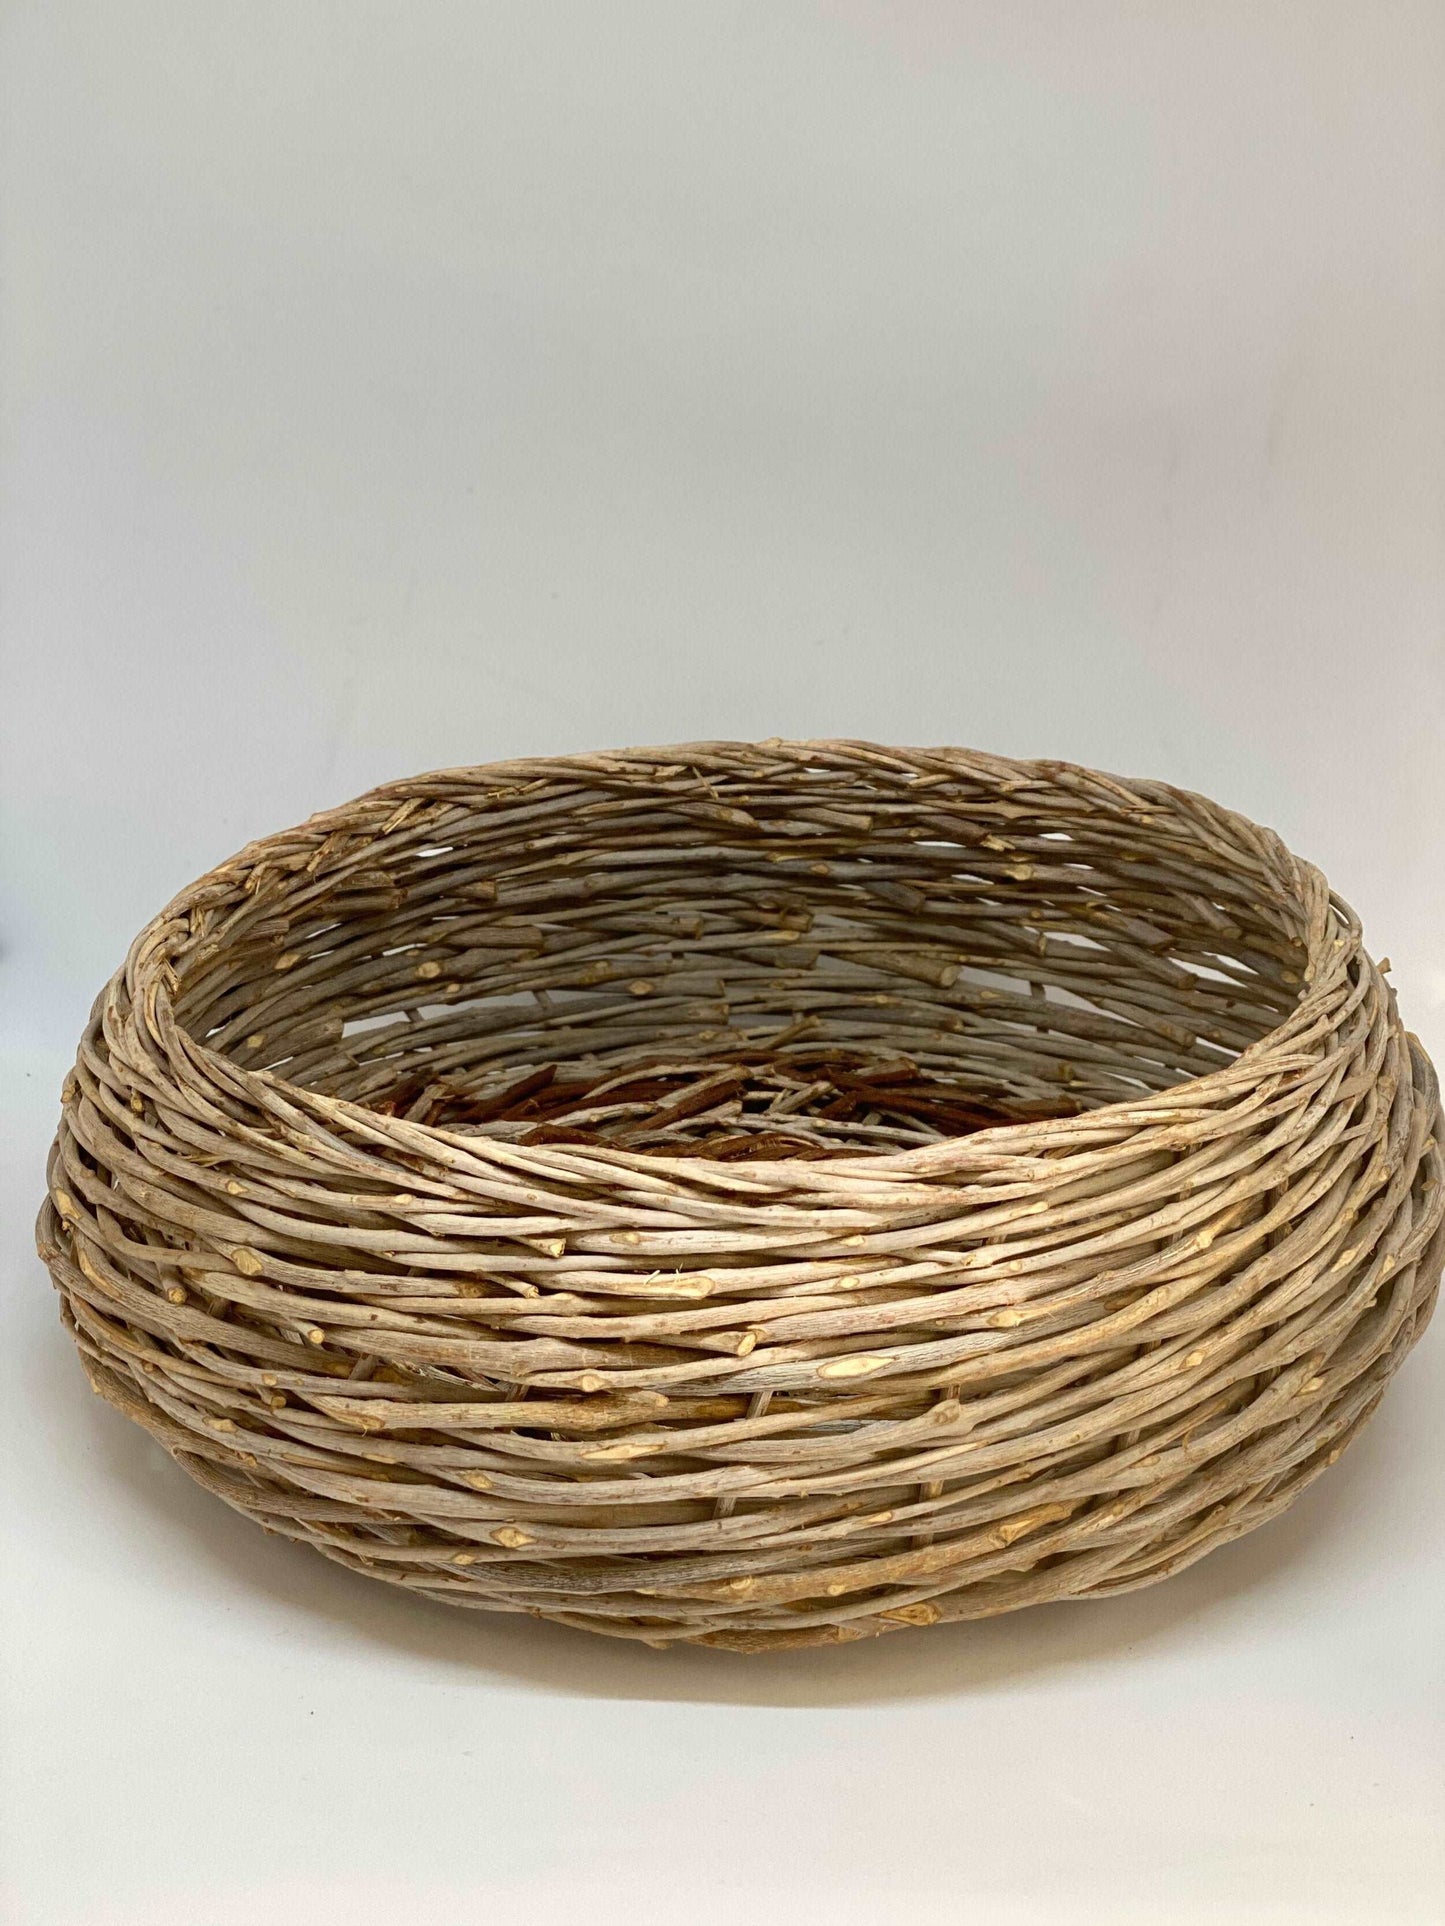 olive-wood-woven-basket-fruit-Canaan-farm-Palestine